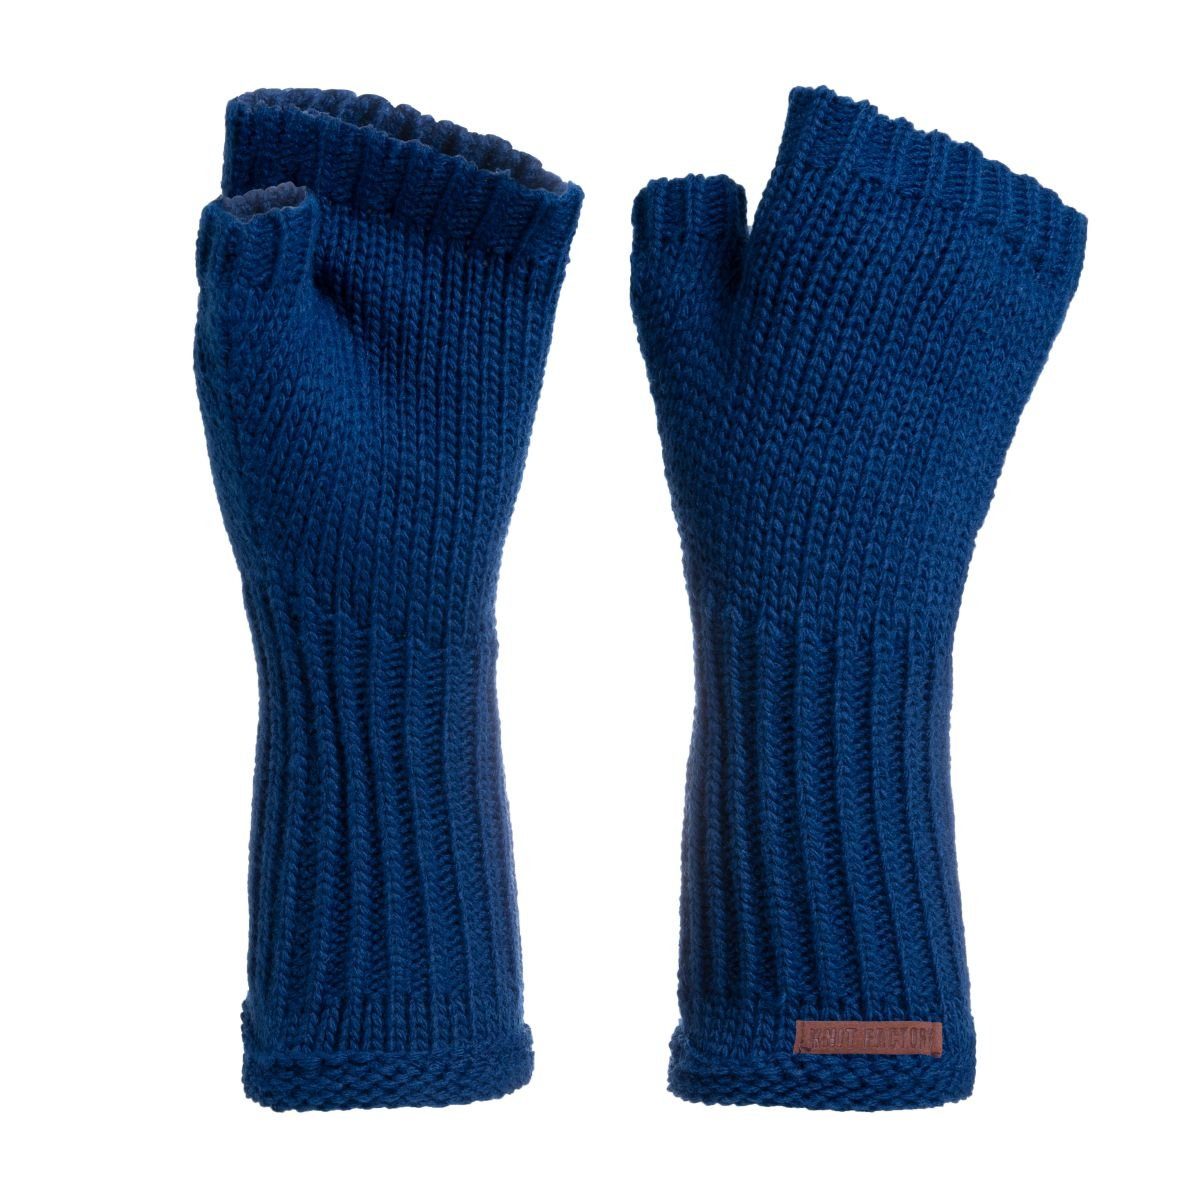 Knit Factory Strickhandschuhe Cleo Handschuhe One Size Glatt Dunkelblau Handschuhe Handstulpen Handschuhe ihne Finger Kings Blue